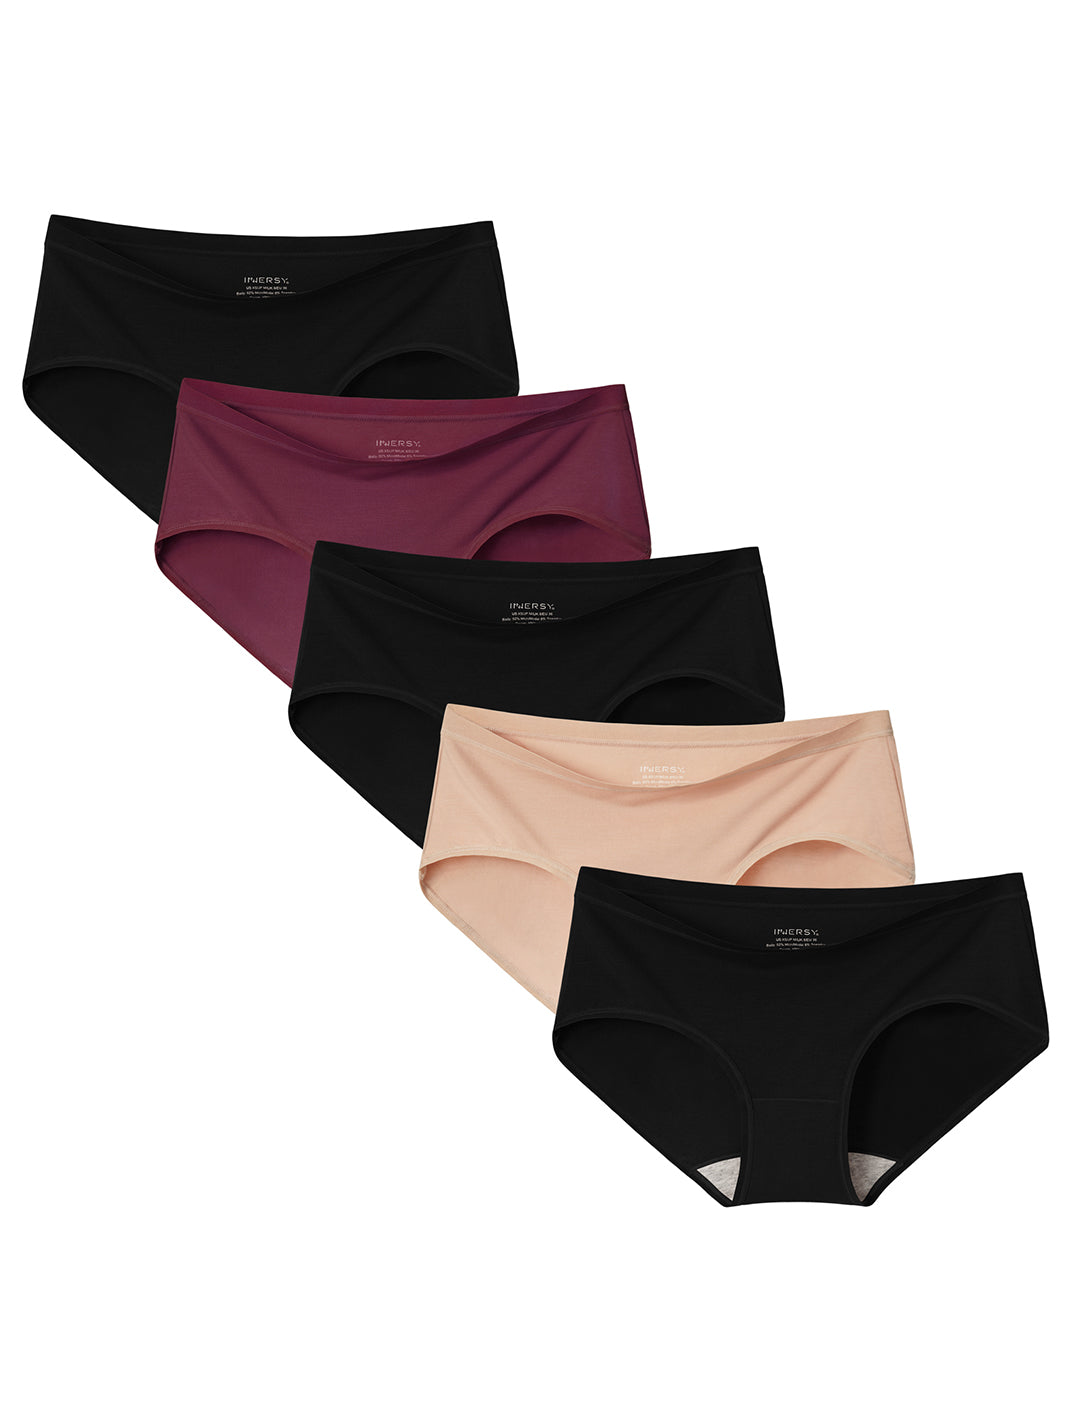 Women's Modal Quick Dry Panties 5-Pack